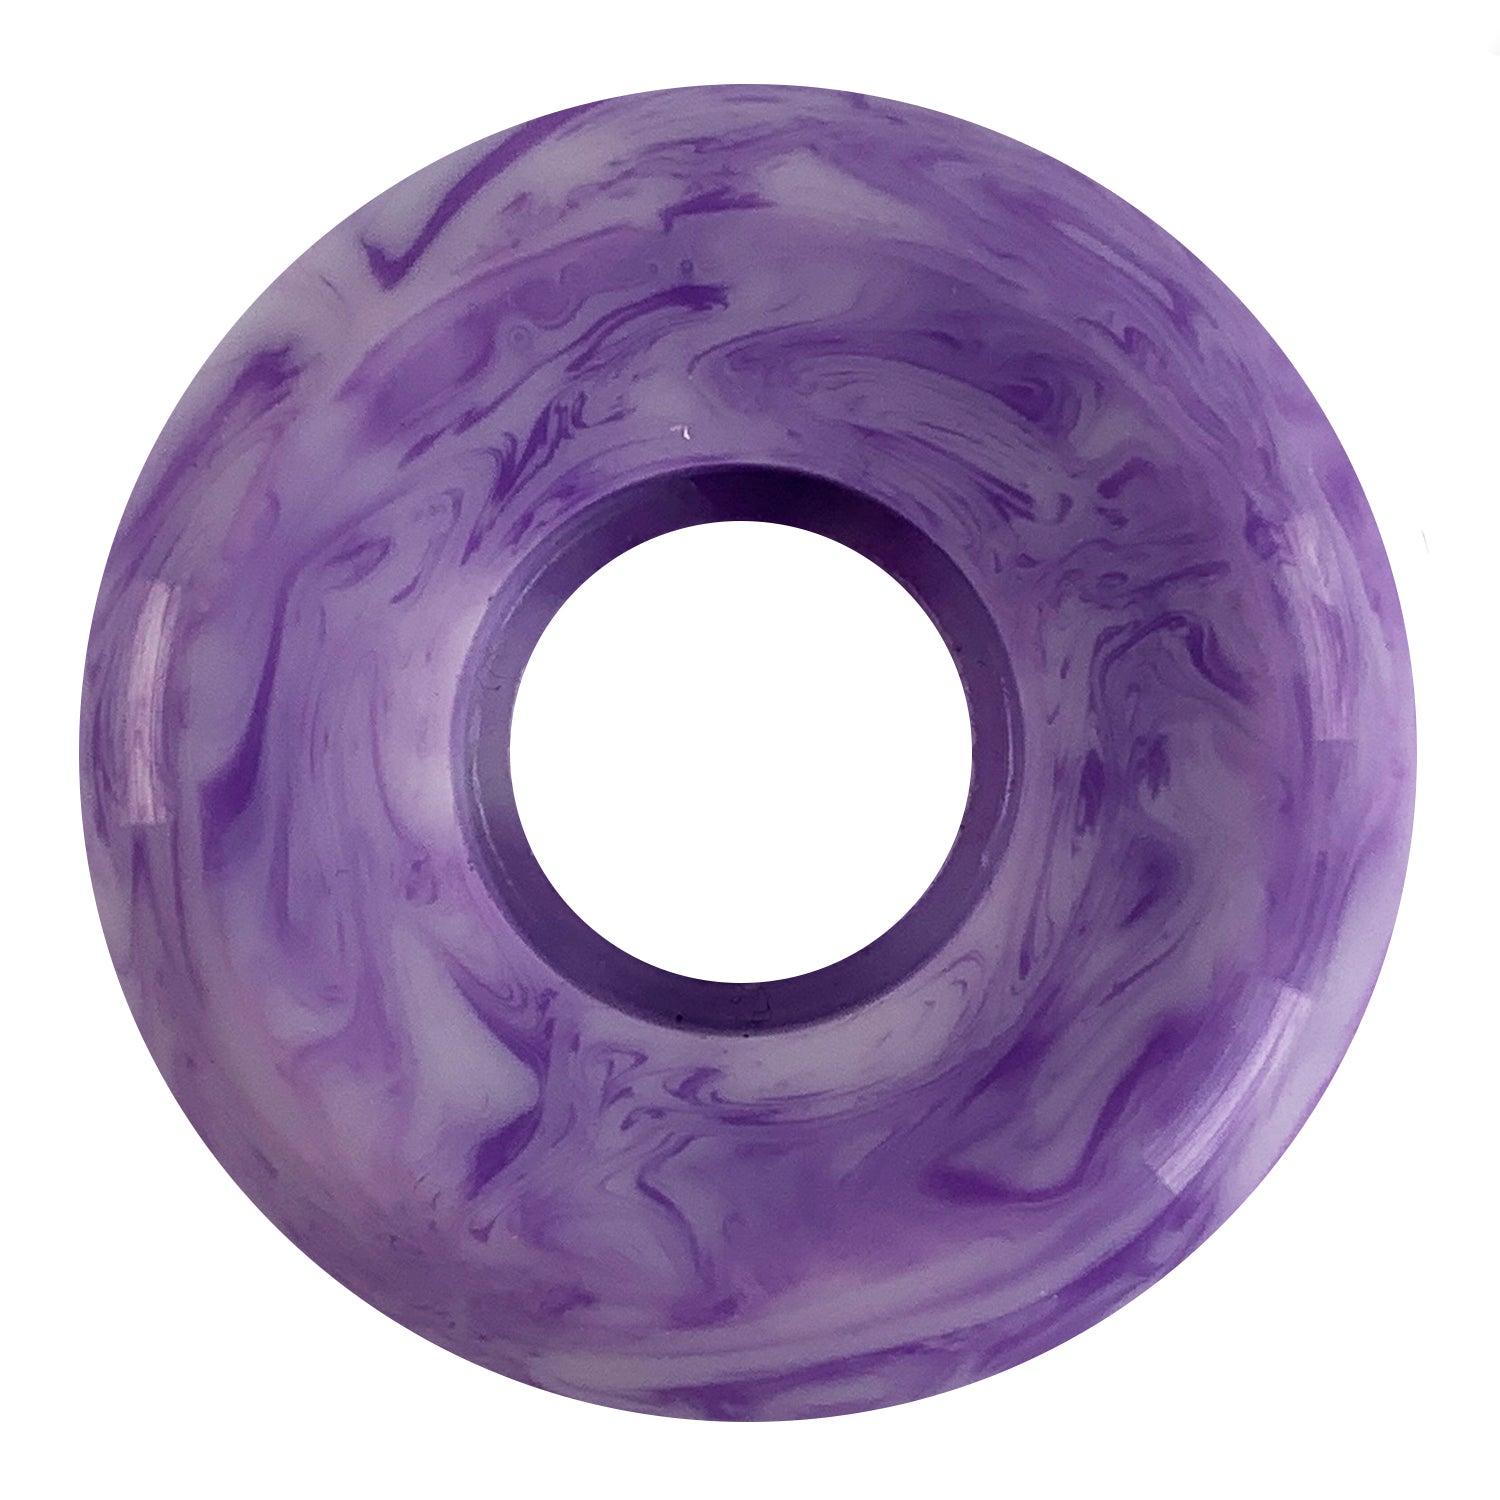 Orbs - 54mm - 99a - Specters Swirls - Purple/White - Prime Delux Store